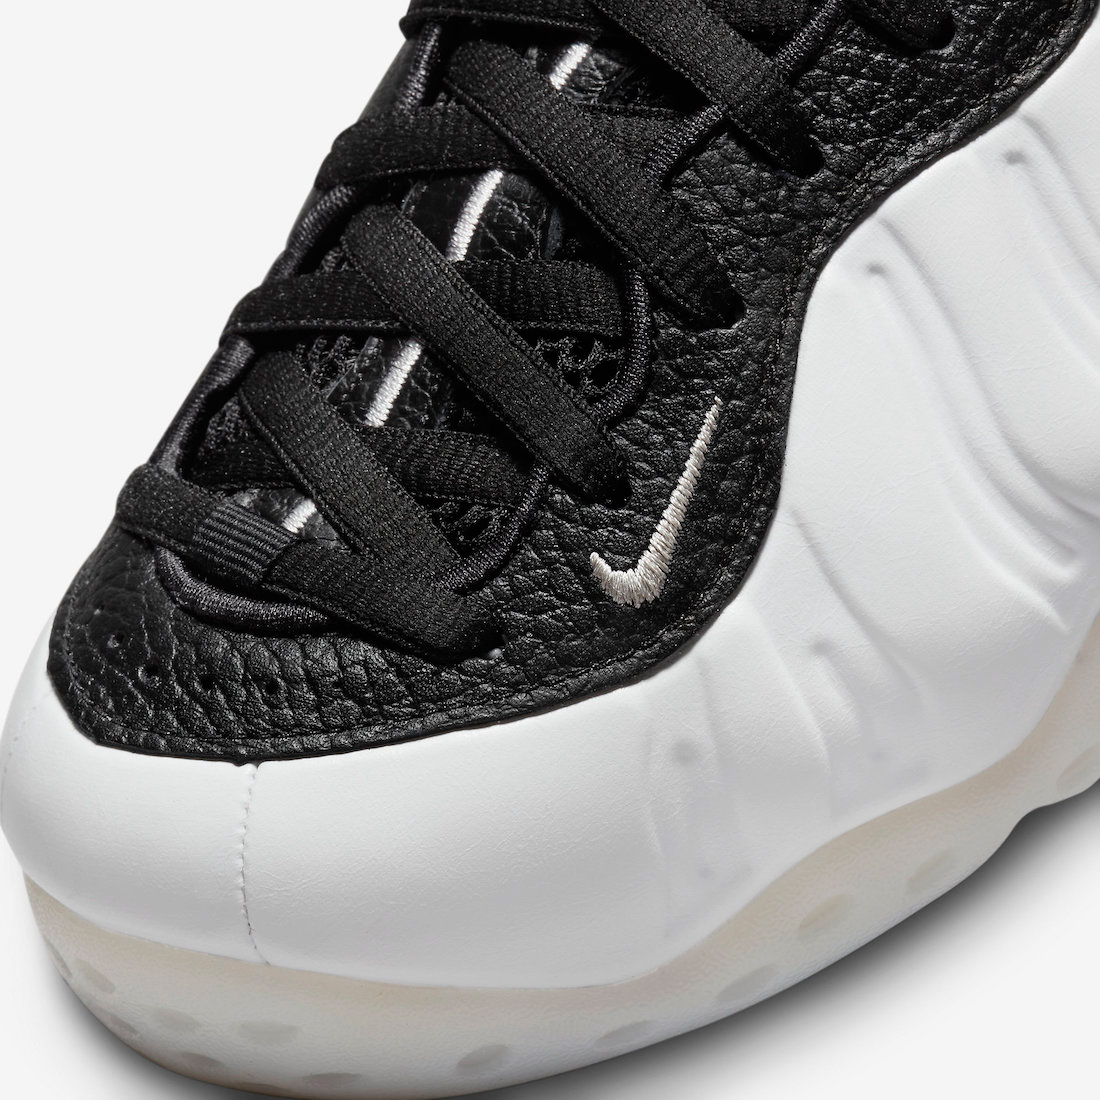 Nike-Air-Foamposite-One-Penny-PE-White-Black-Release-Date-7